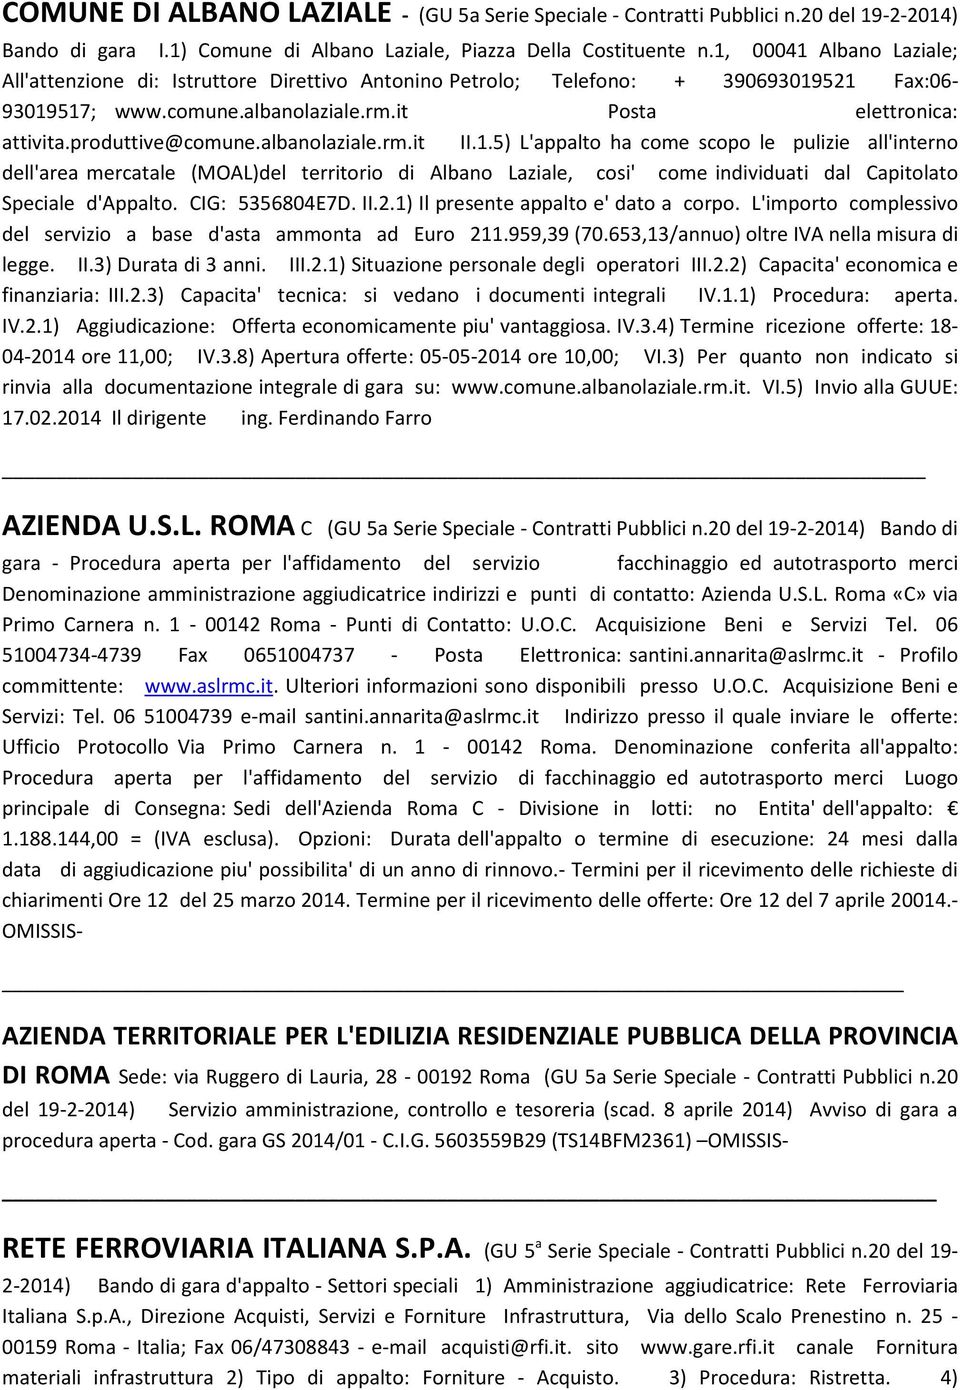 produttive@comune.albanolaziale.rm.it II.1.